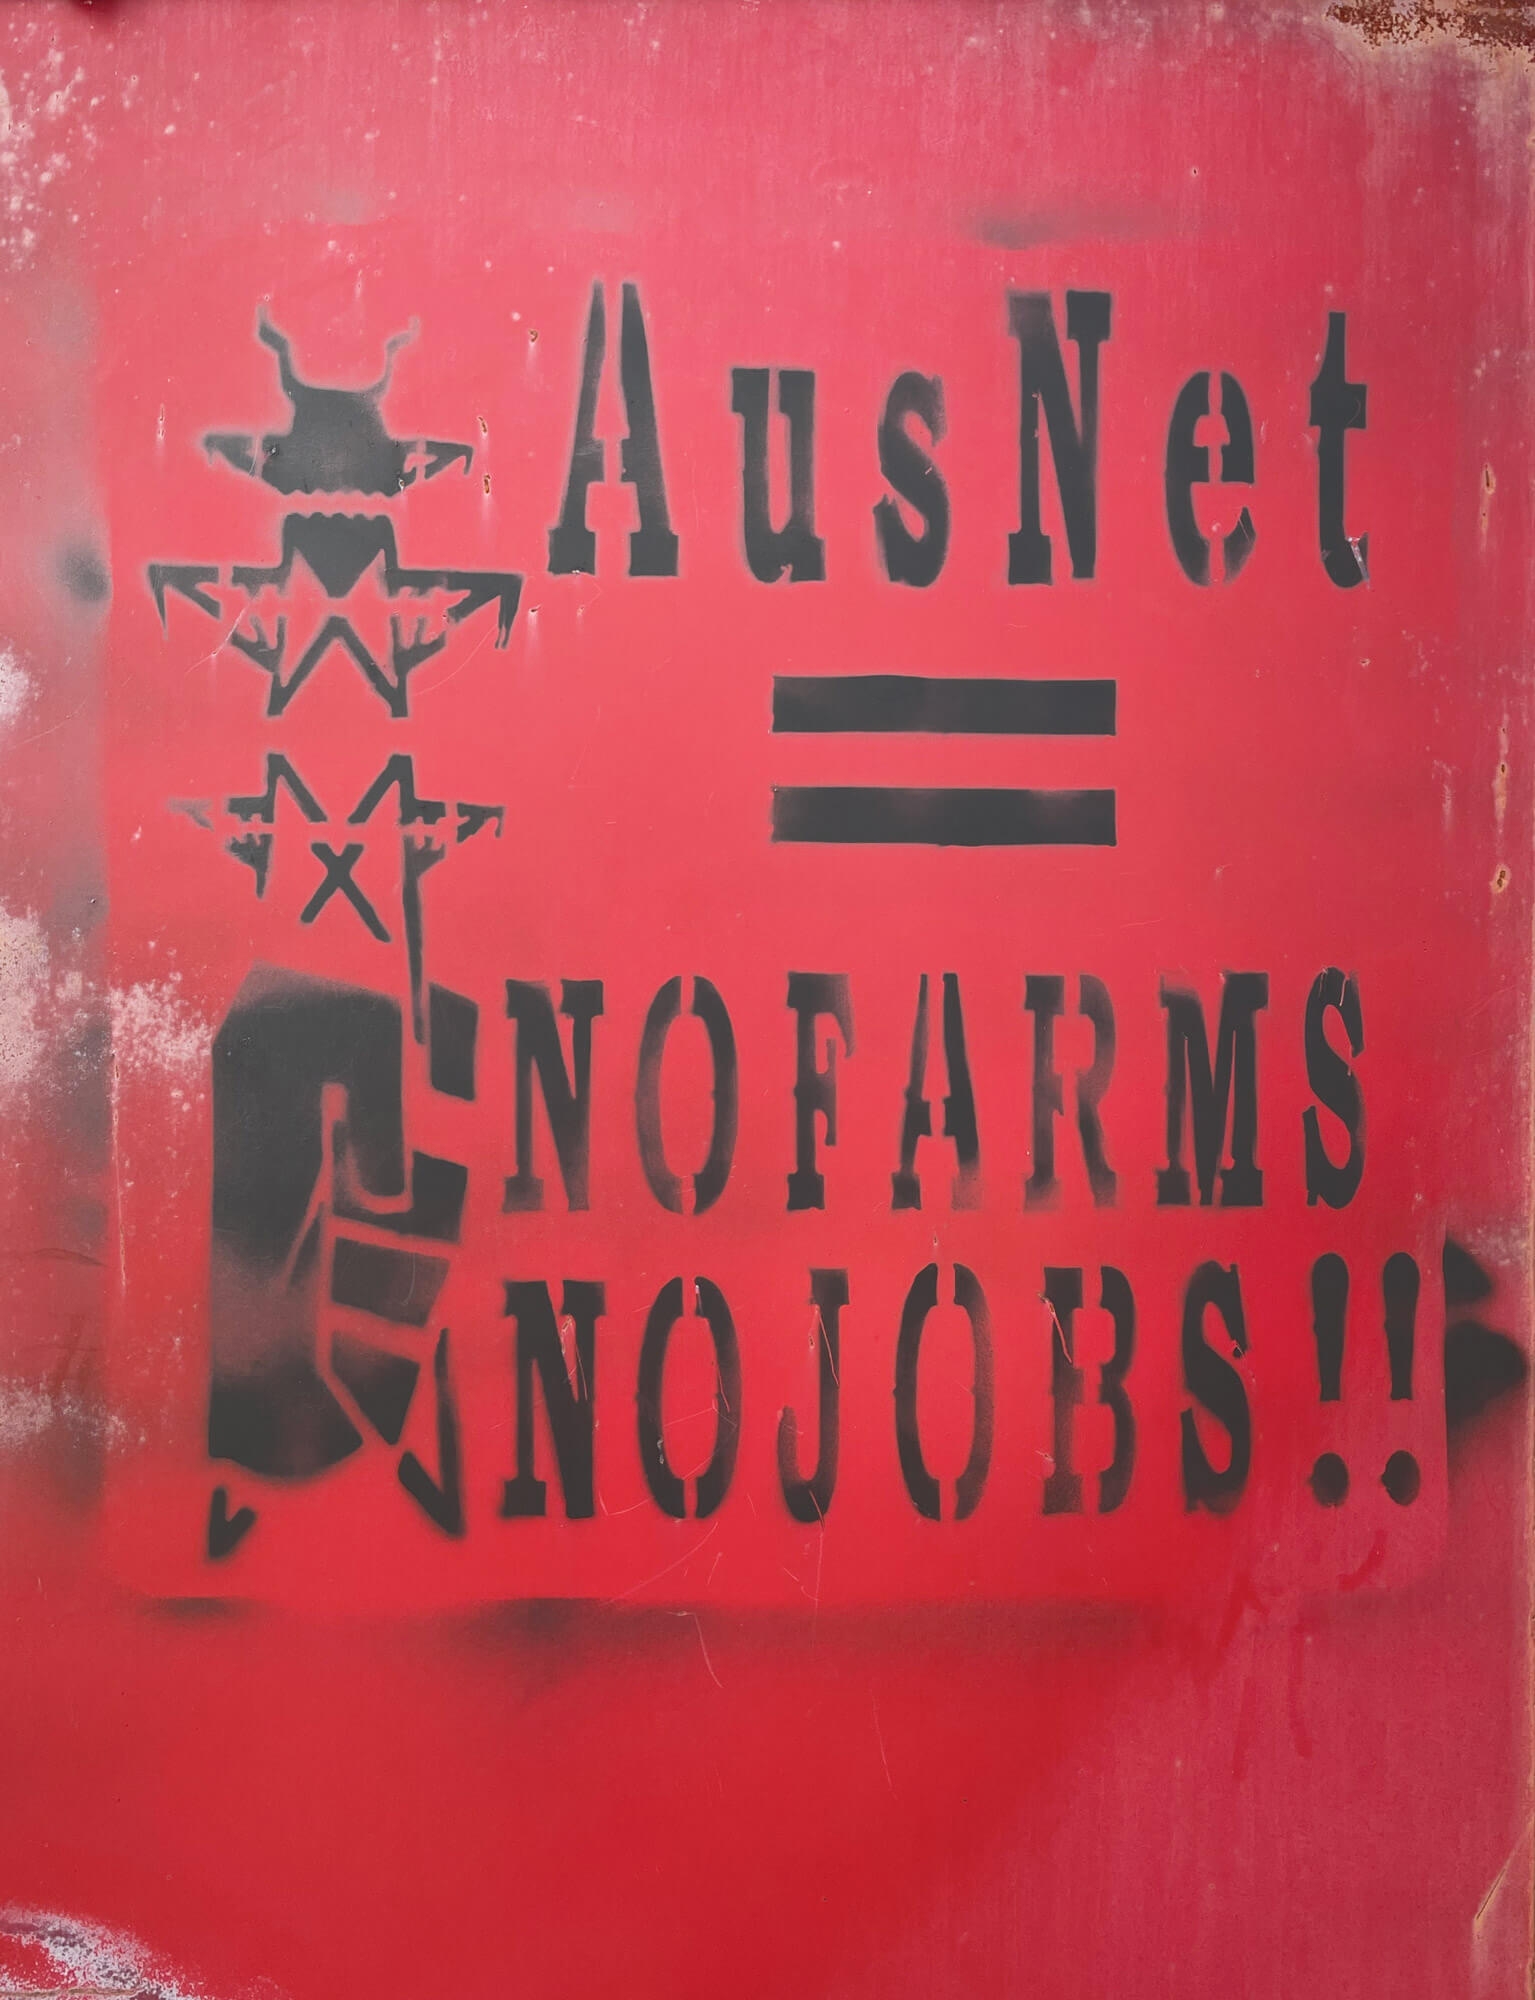 Rural Activism Piss off Ausnet - News Article | Atollon - a design company